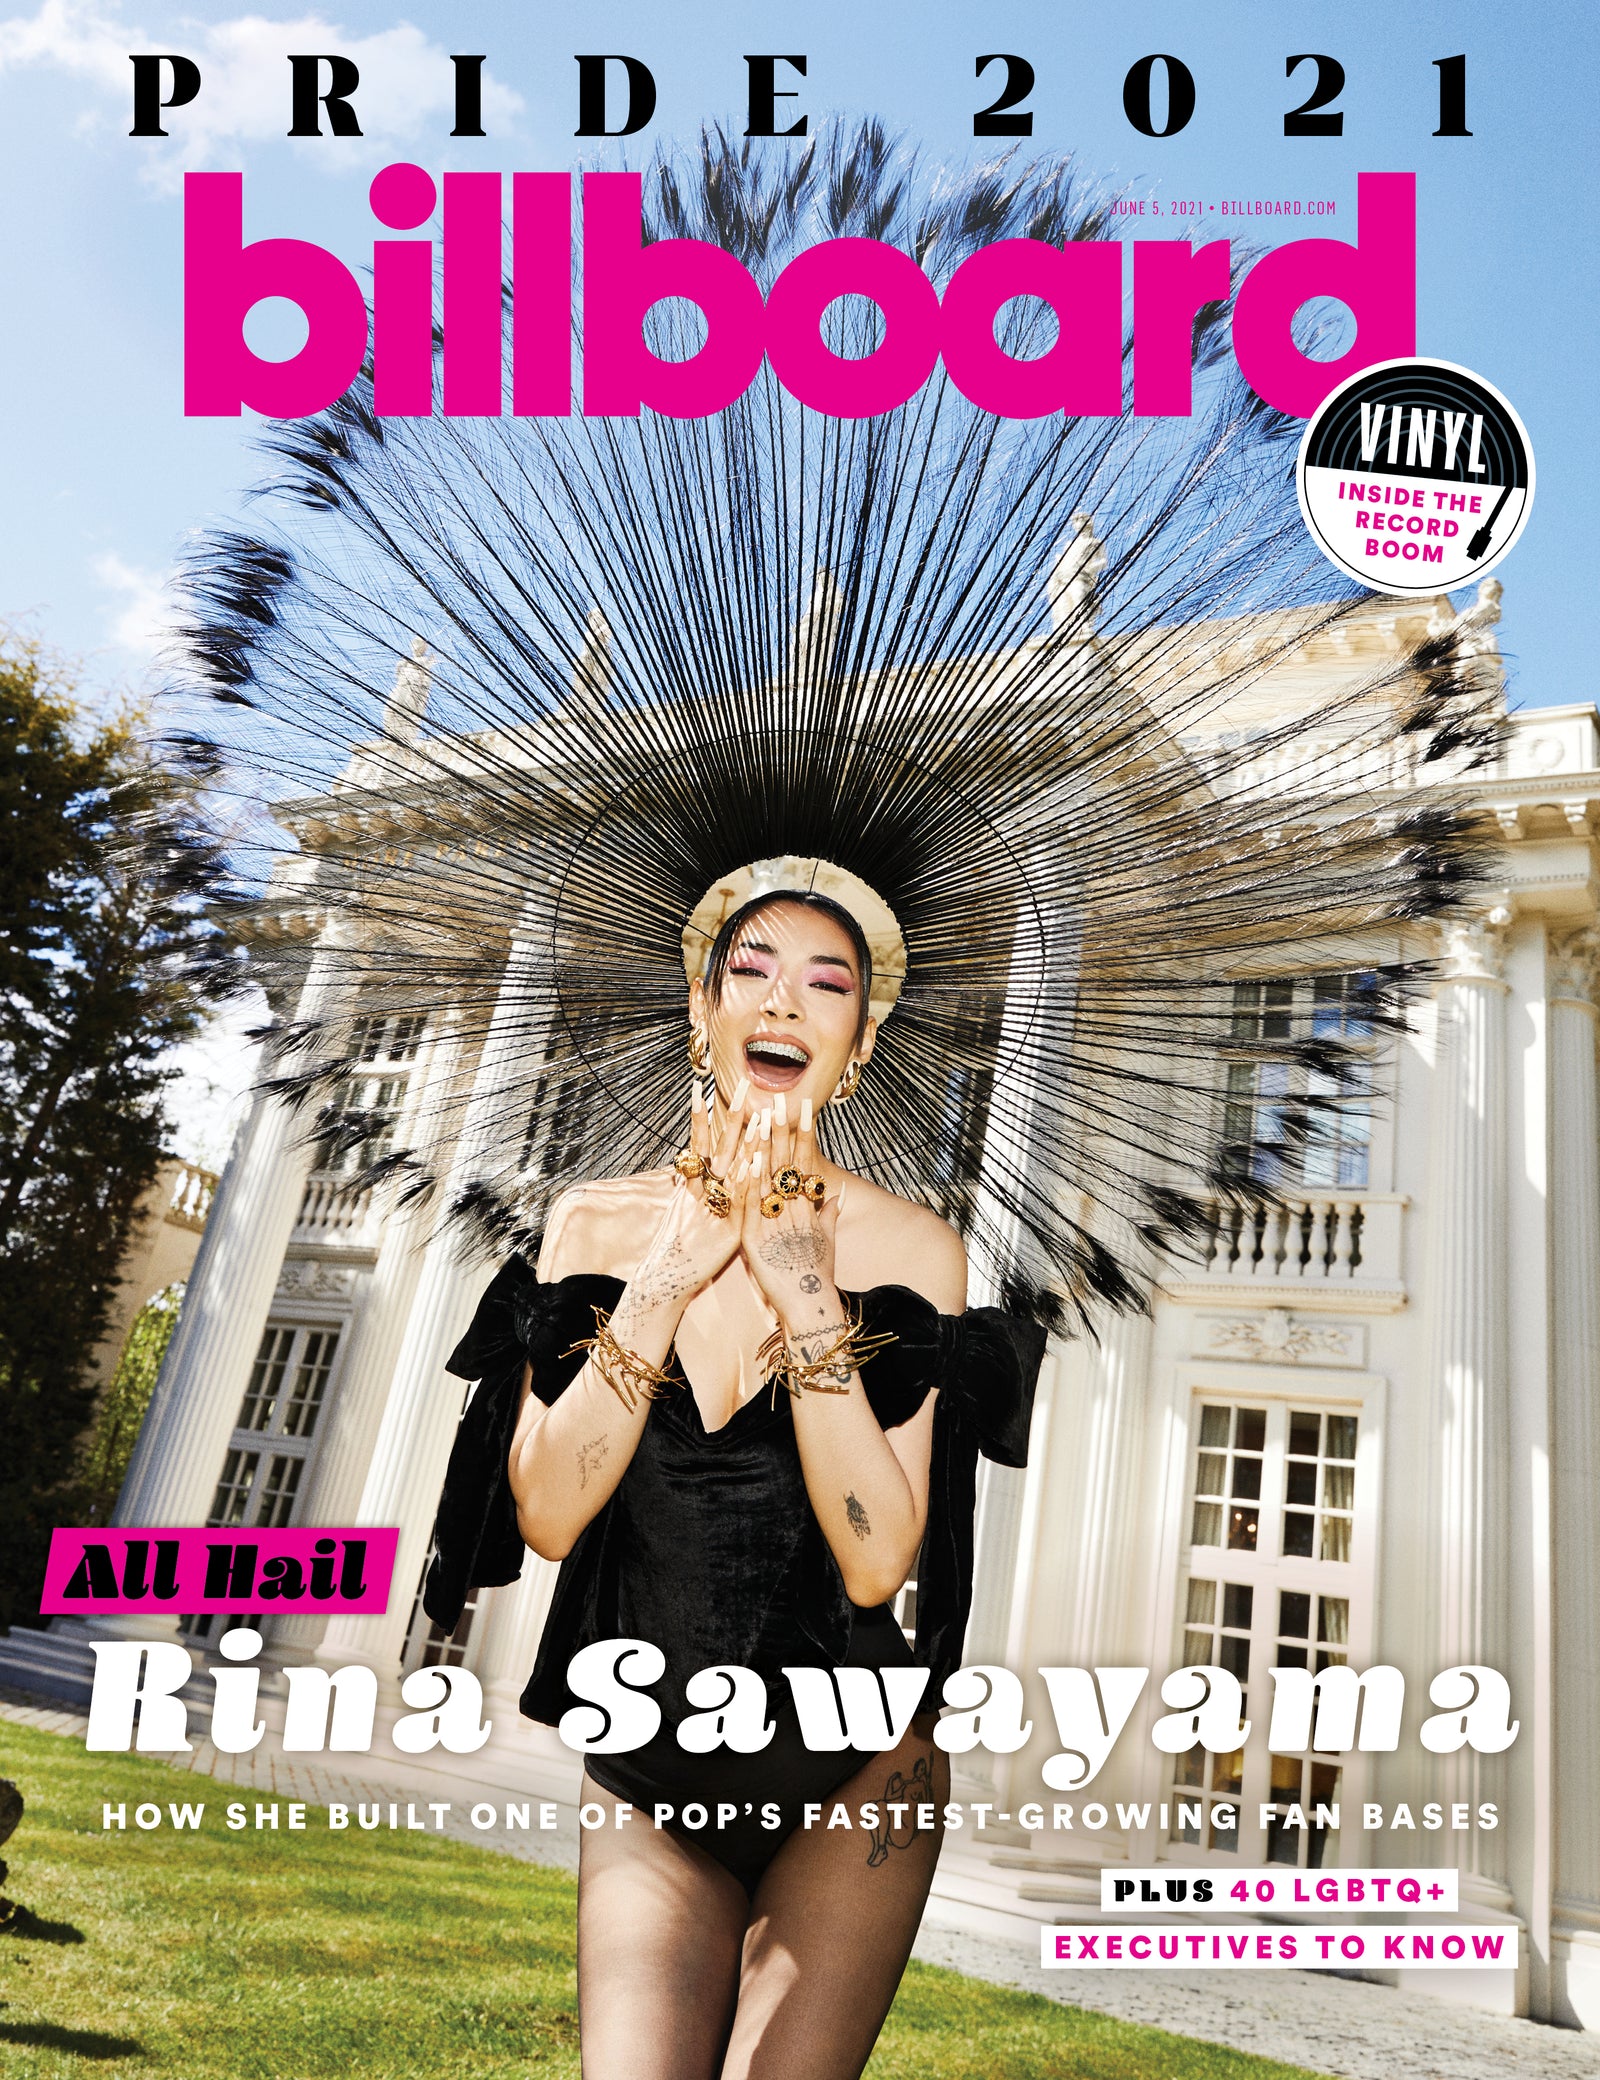 Billboard Collector's Zine Featuring TWICE - Billboard Magazine Store